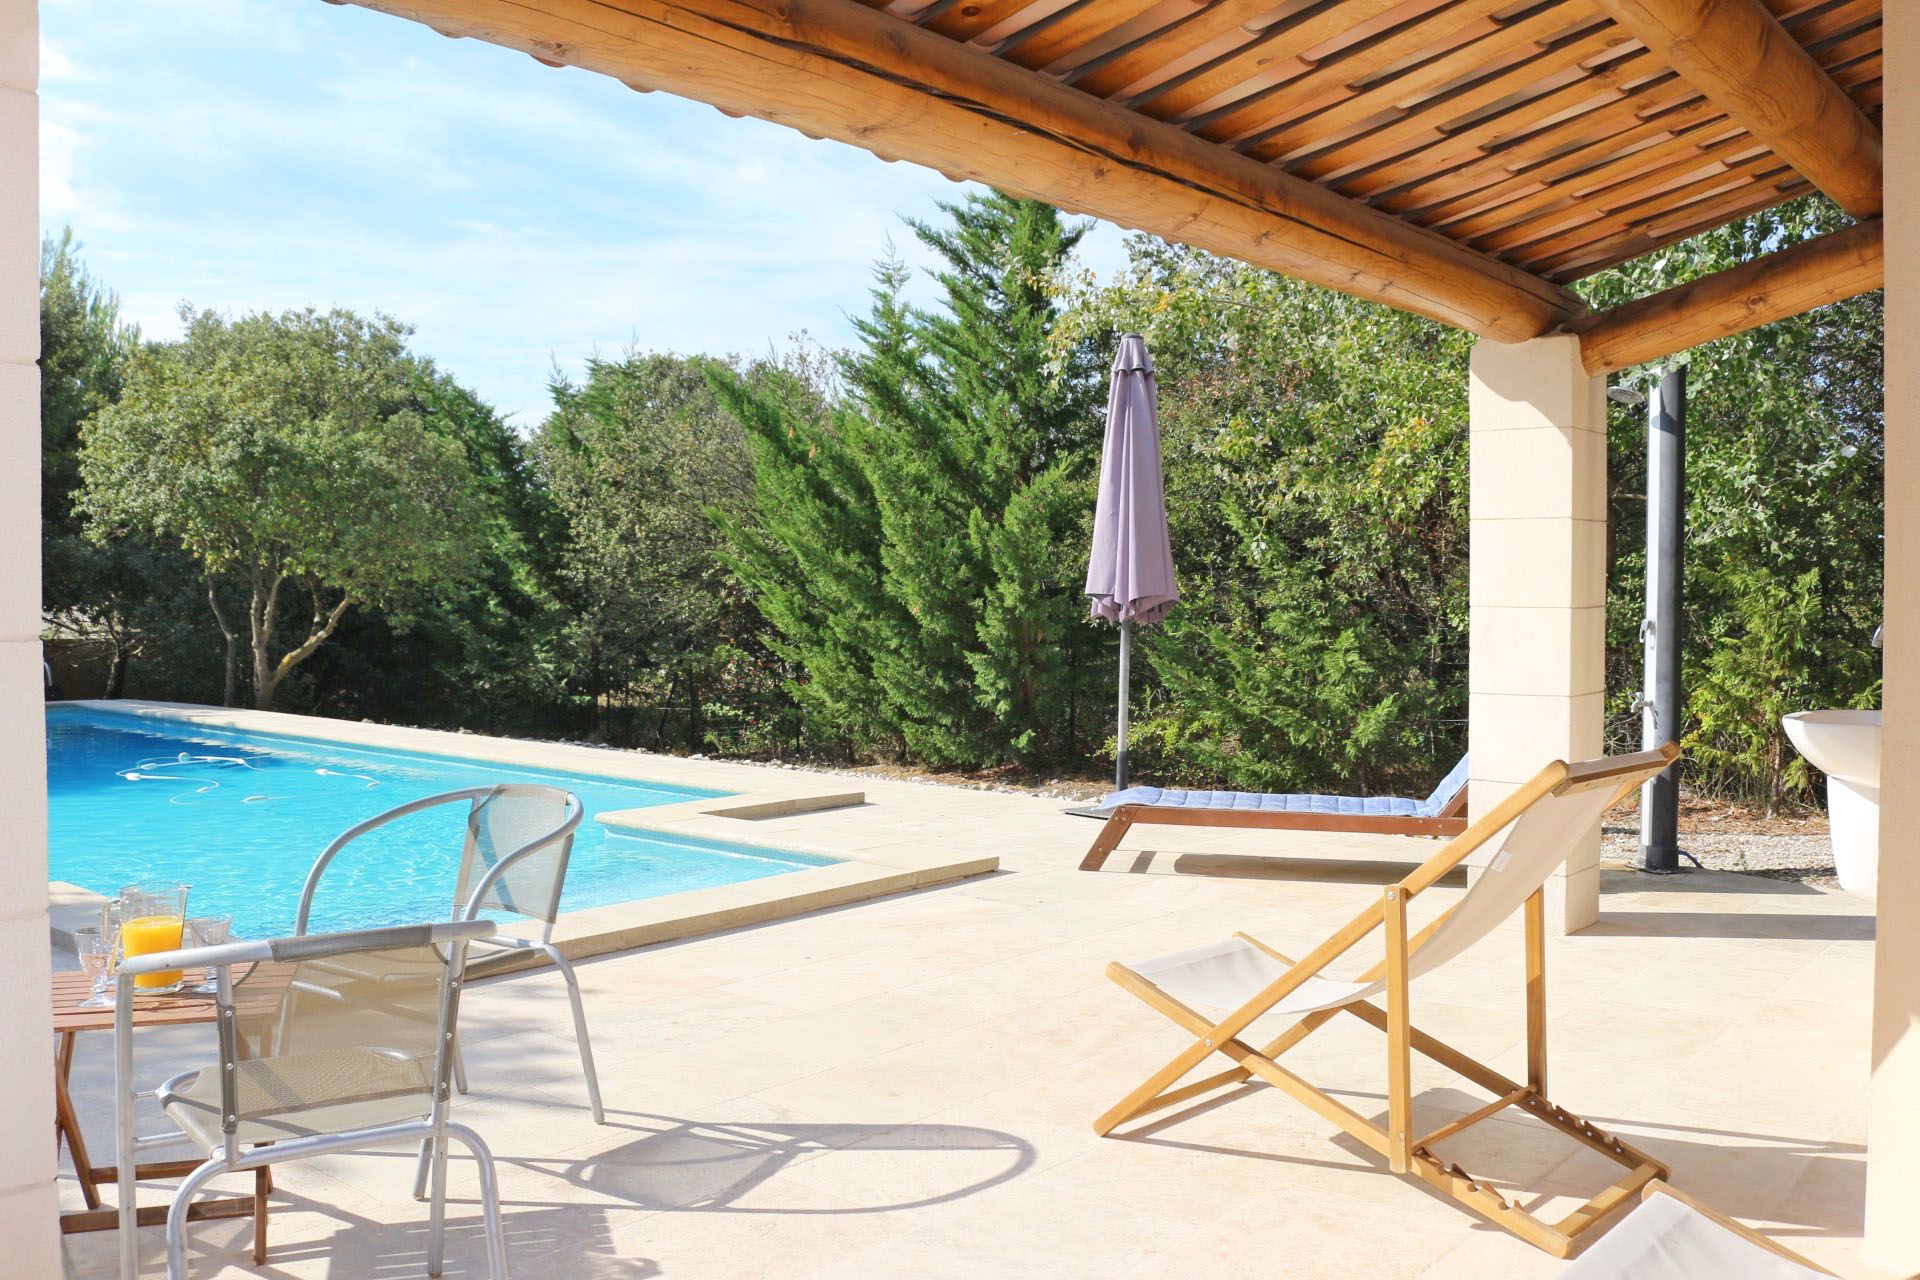 Méditerranée Location Bastide with Private pool in Isle sur la Sorgue, Provence